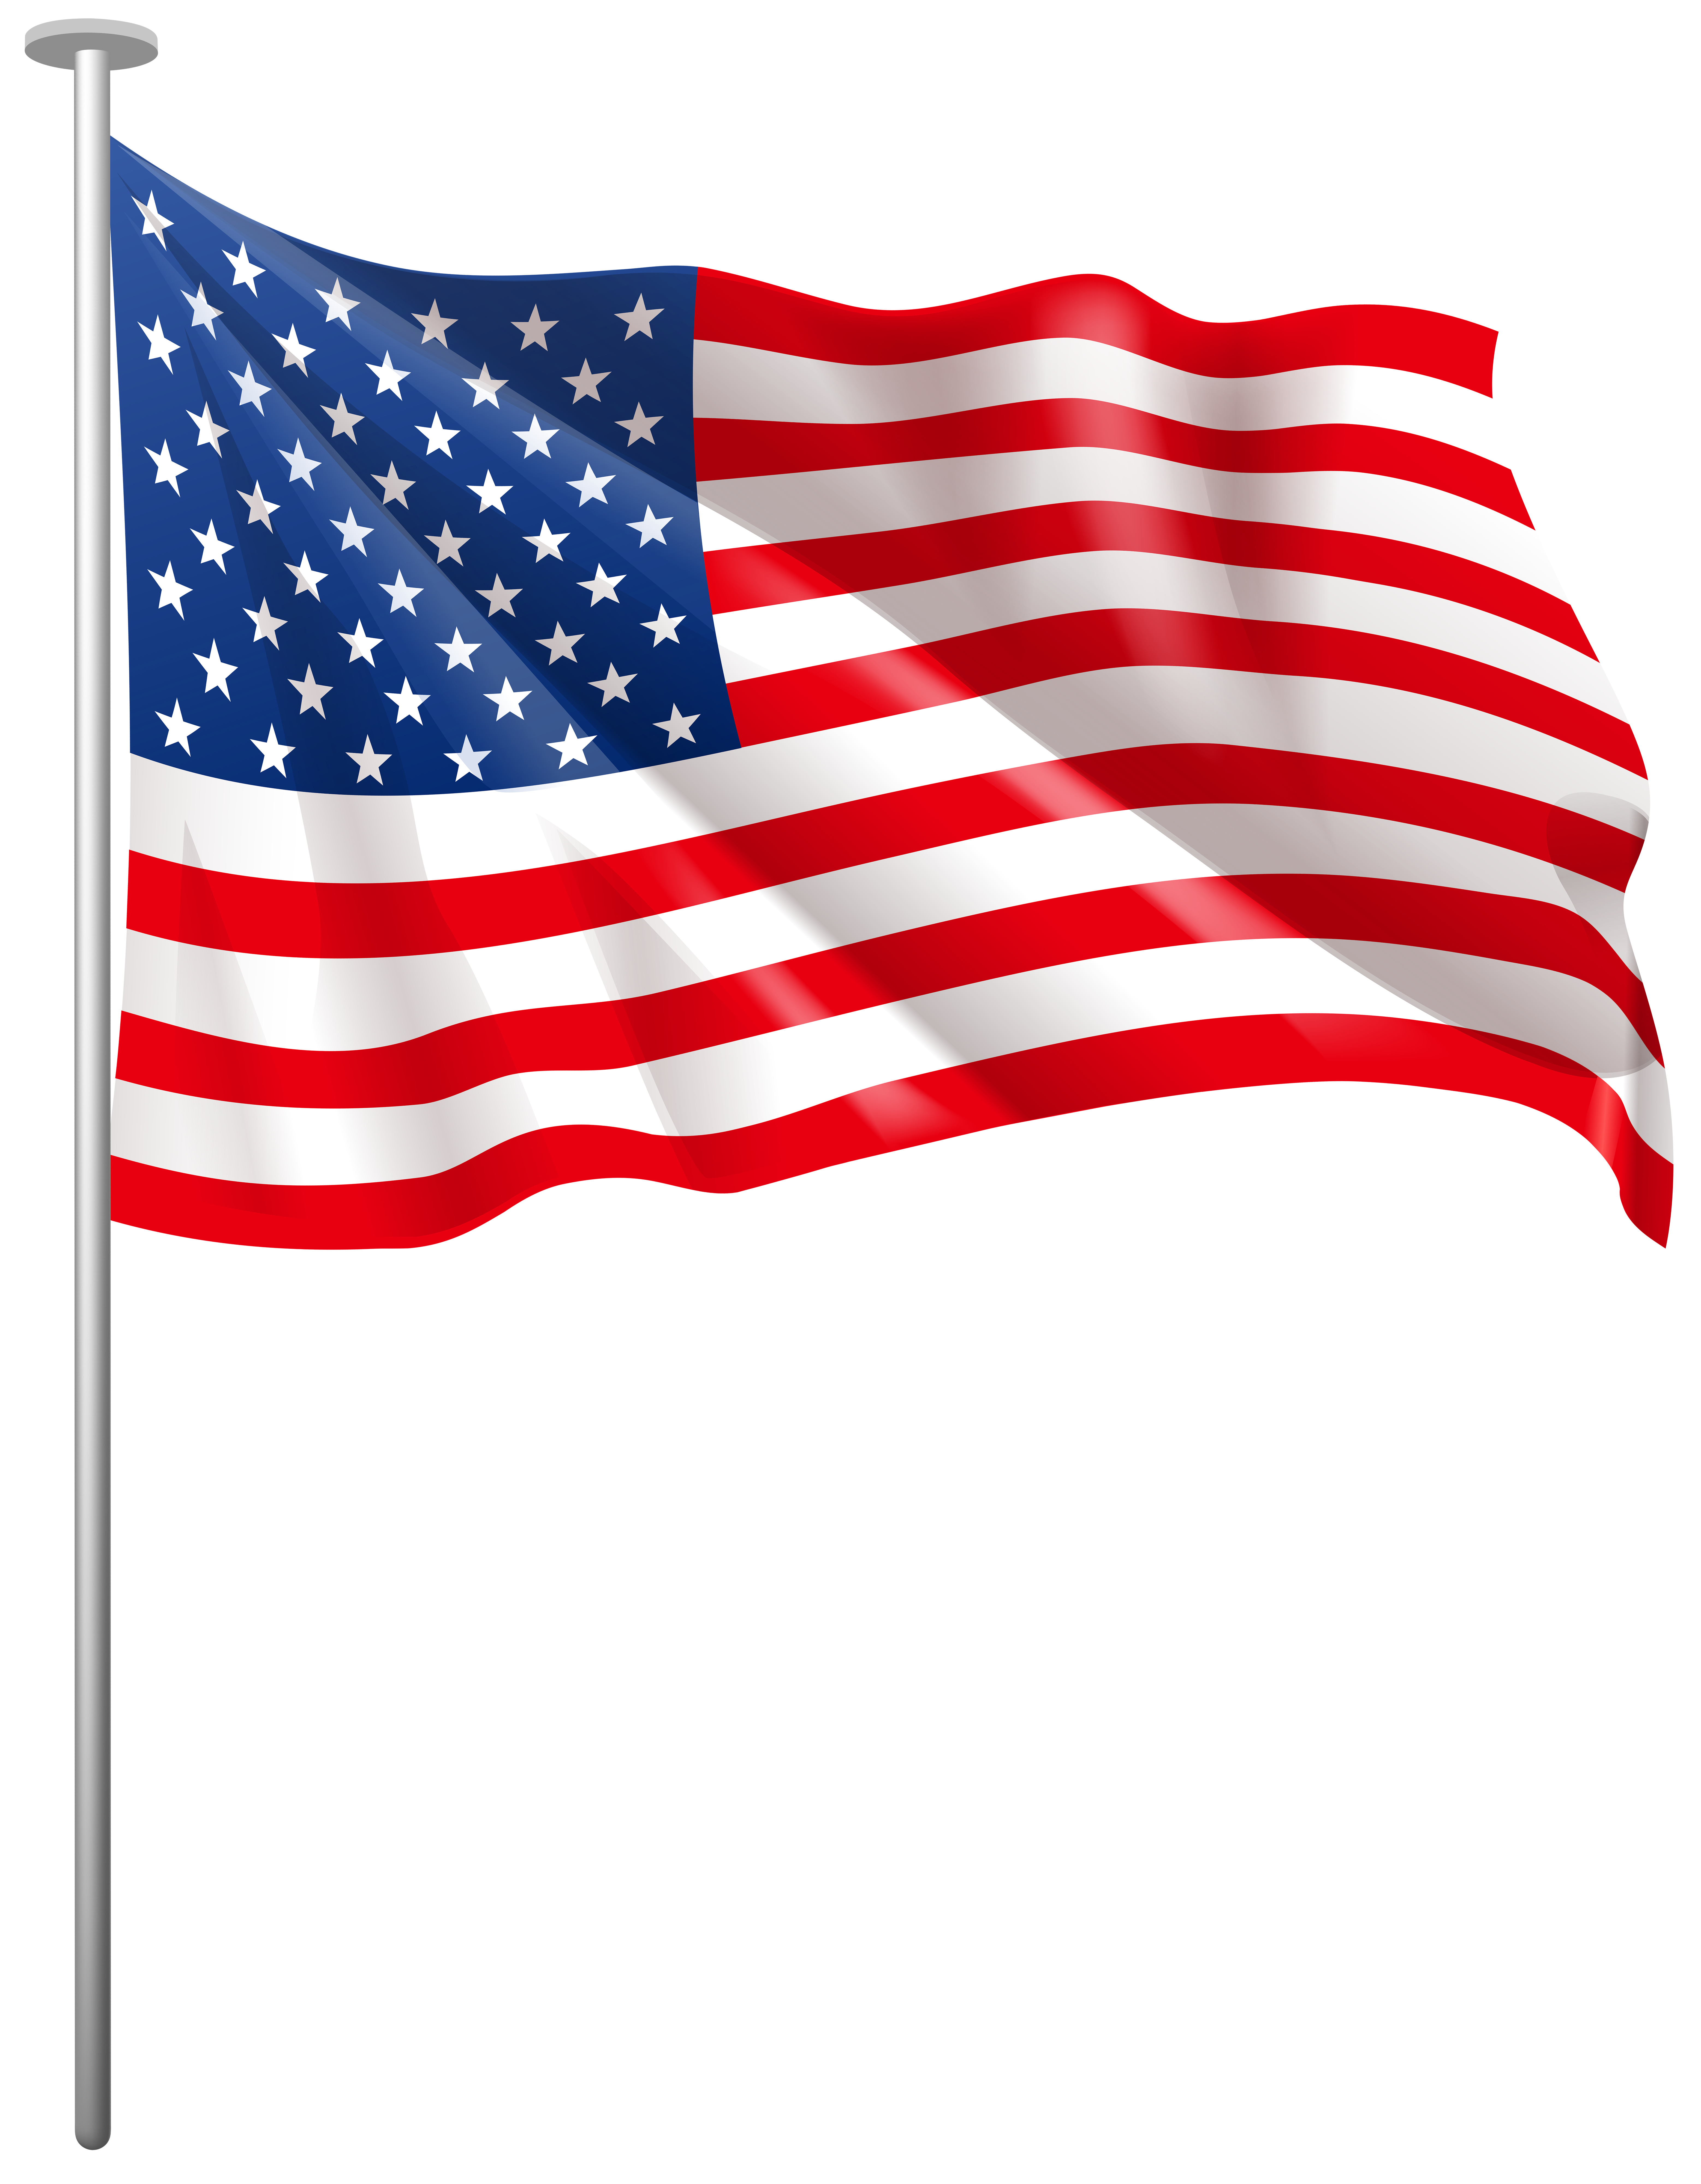 USA Waving Flag PNG Clip Art Image